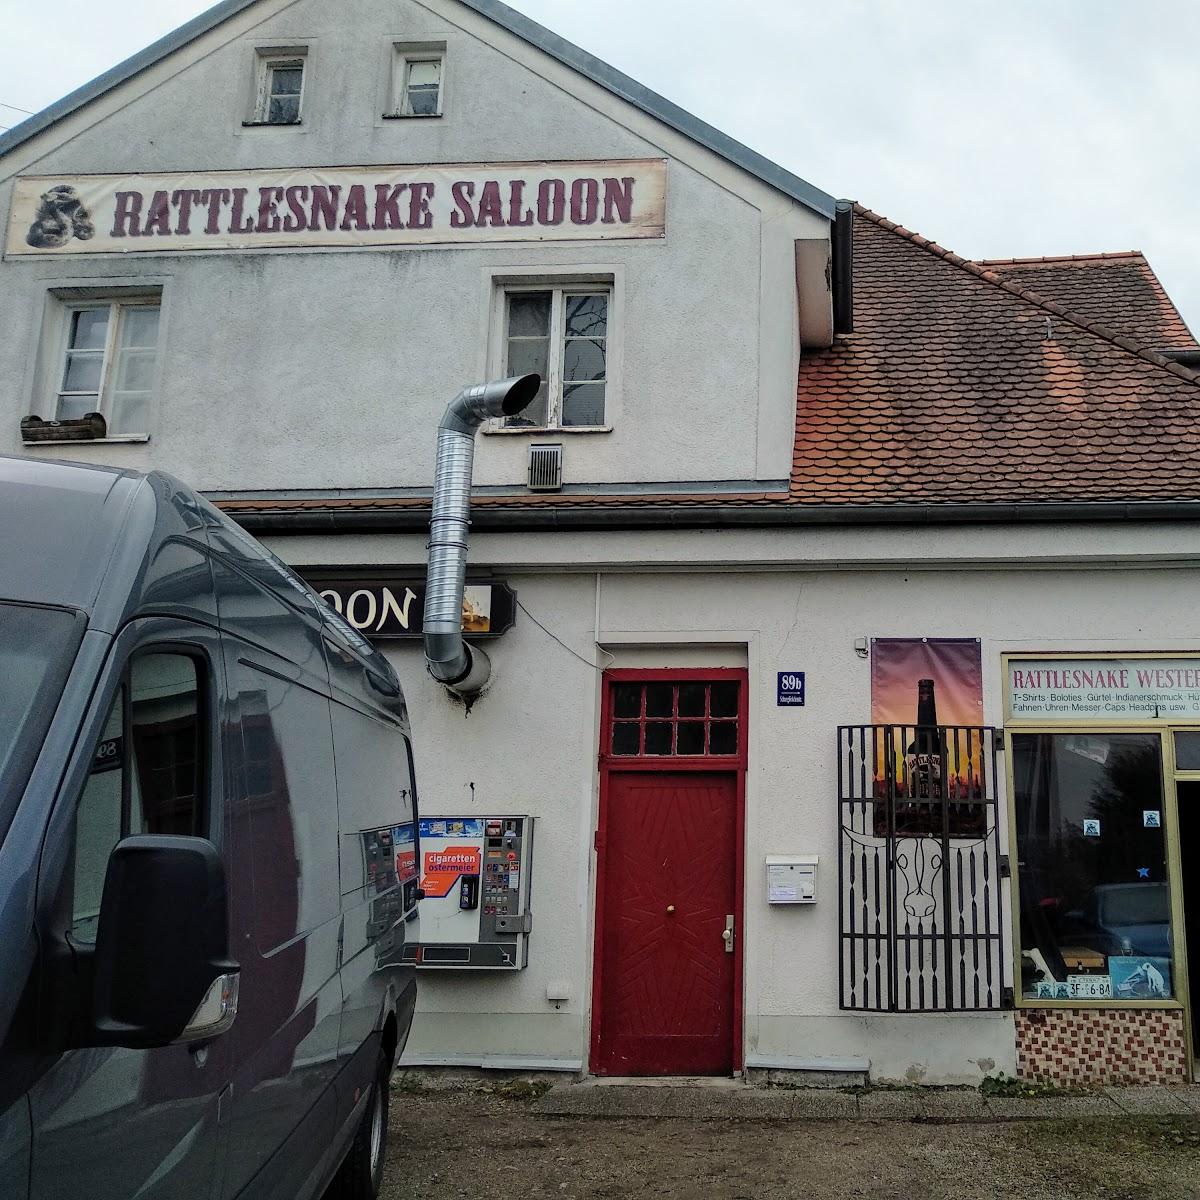 Restaurant "Rattlesnake Saloon" in München